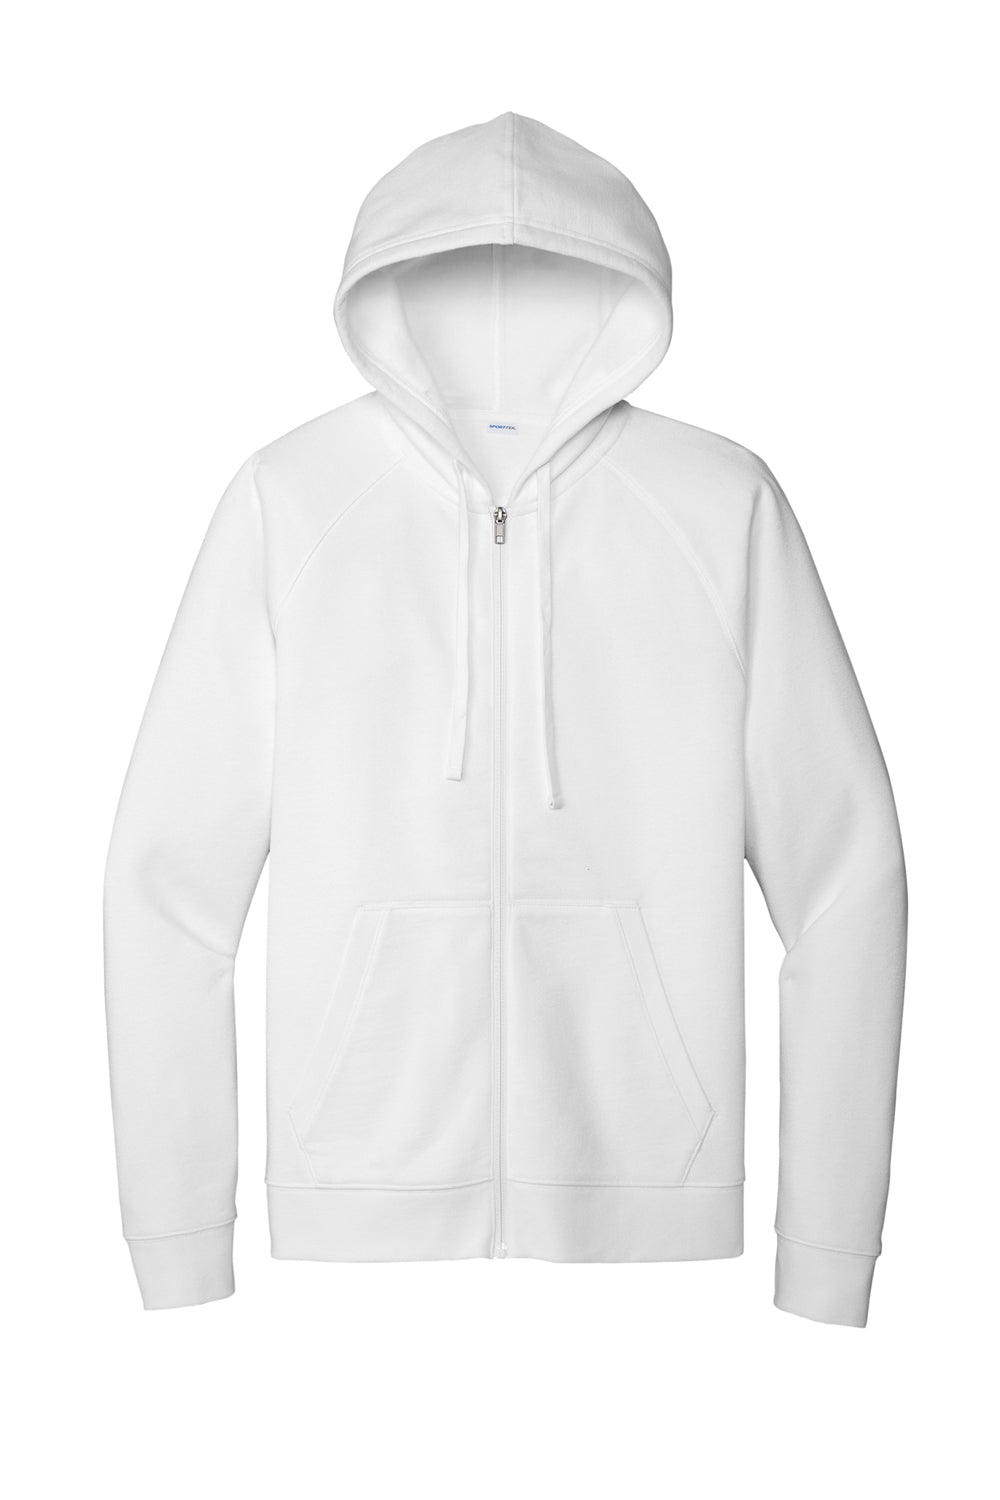 Sport-Tek STF201 Mens Drive Fleece Full Zip Hooded Sweatshirt Hoodie White Flat Front